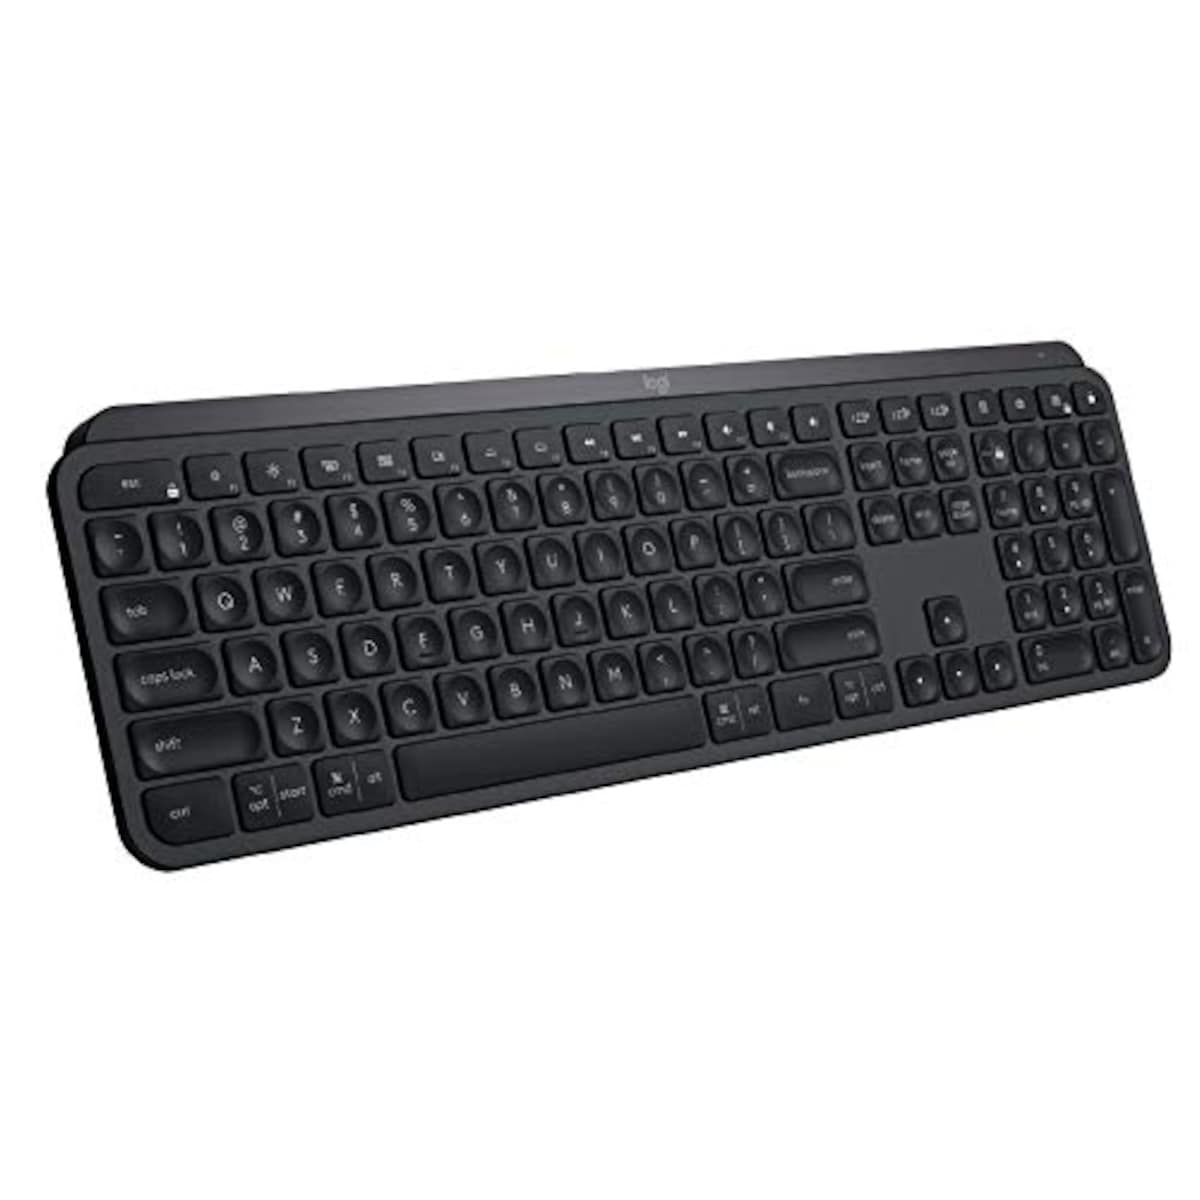 MX Keys Advanced Wireless Illuminated Keyboard